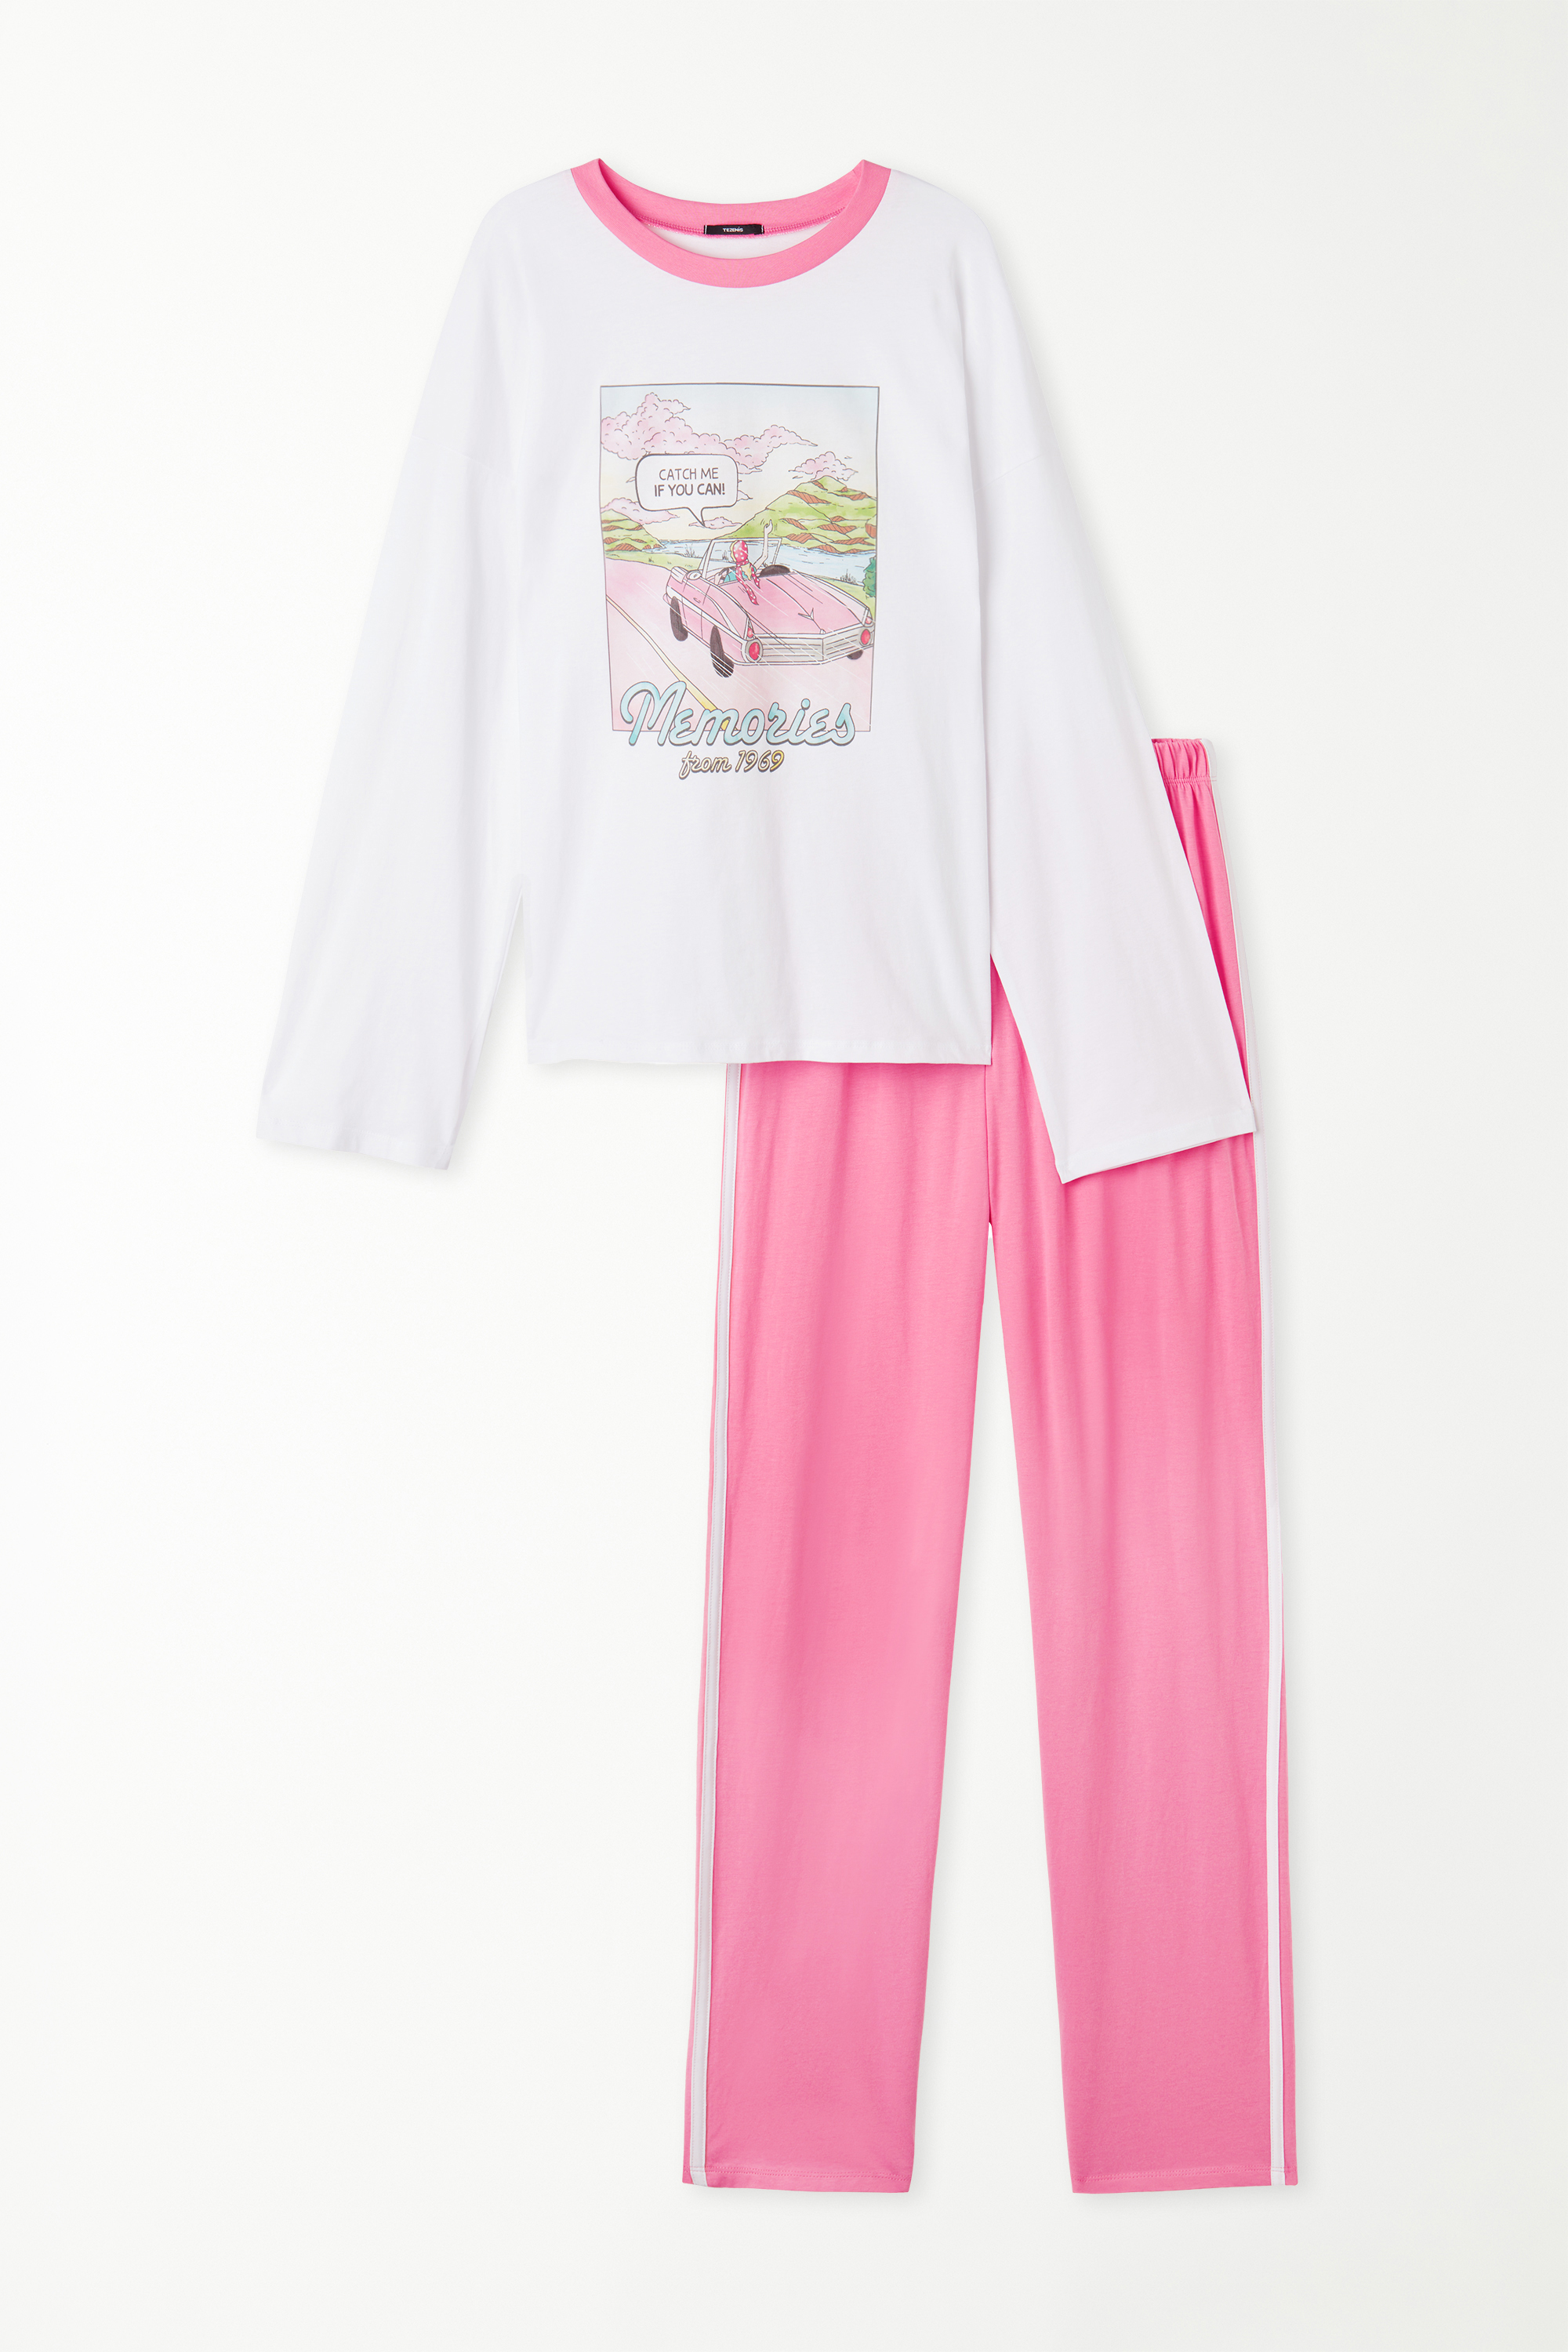 “Memories” Print Long Cotton Pyjamas